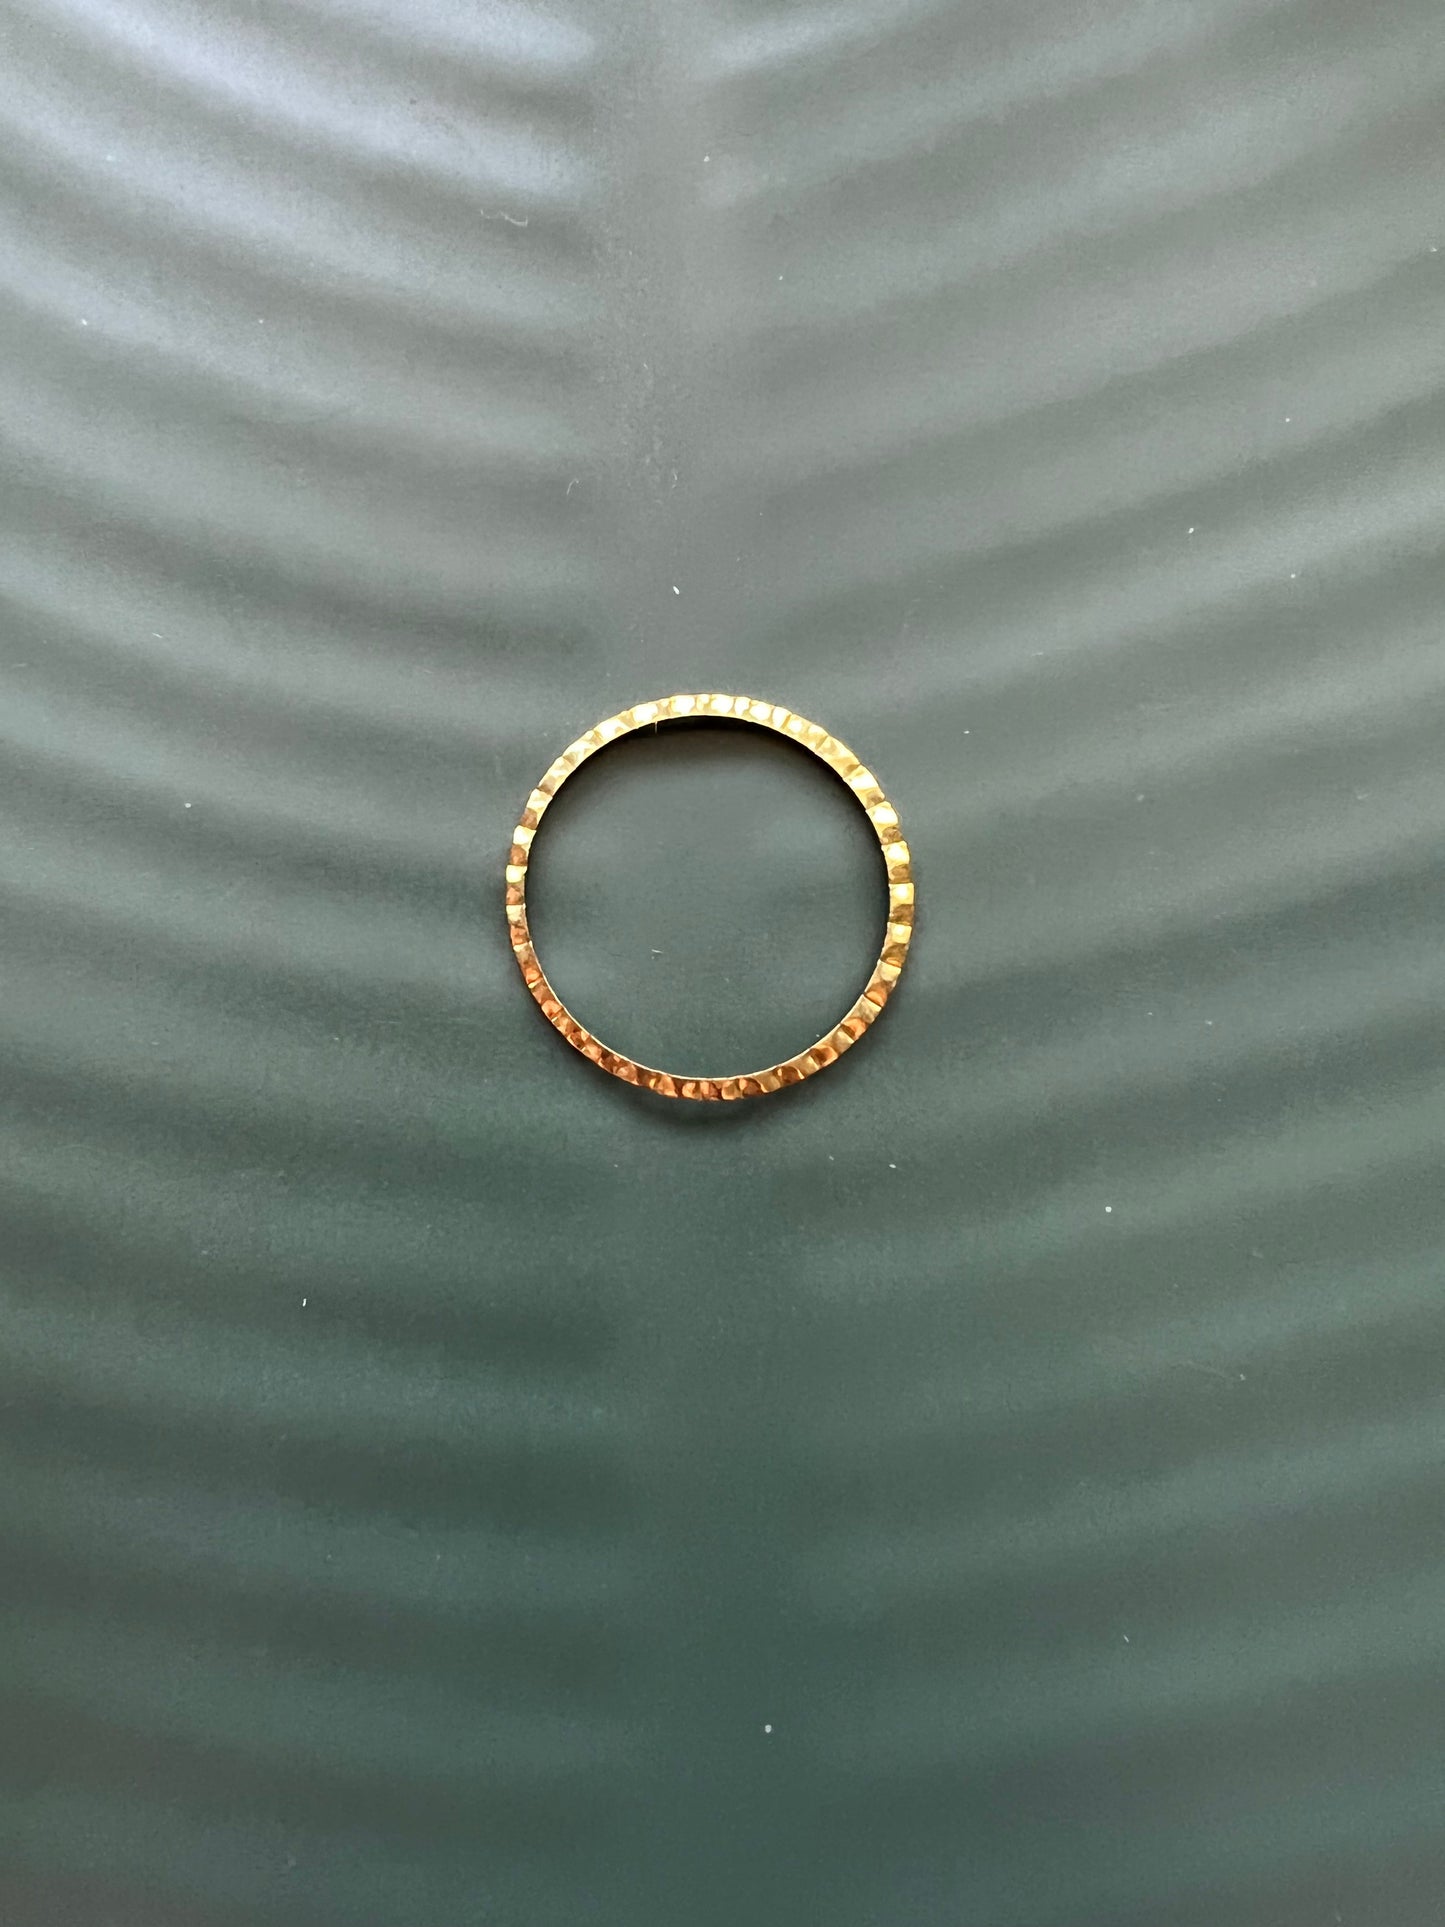 6pcs Brass Textured Circle Connectors - 25mm